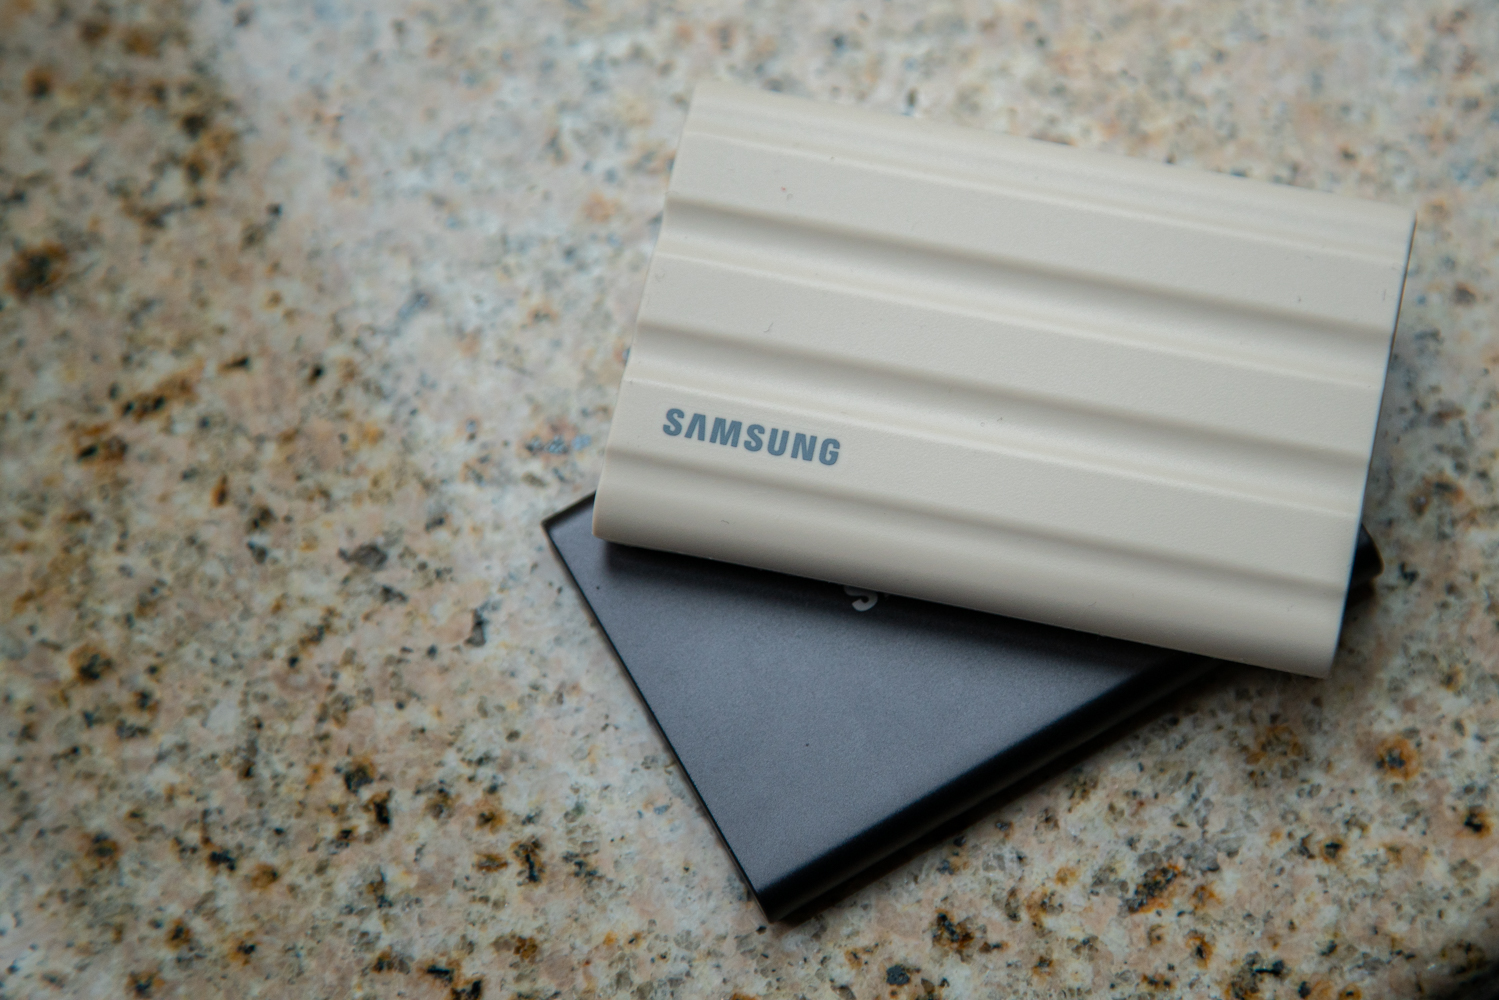 Samsung T7 Shield 1TB external SSD review